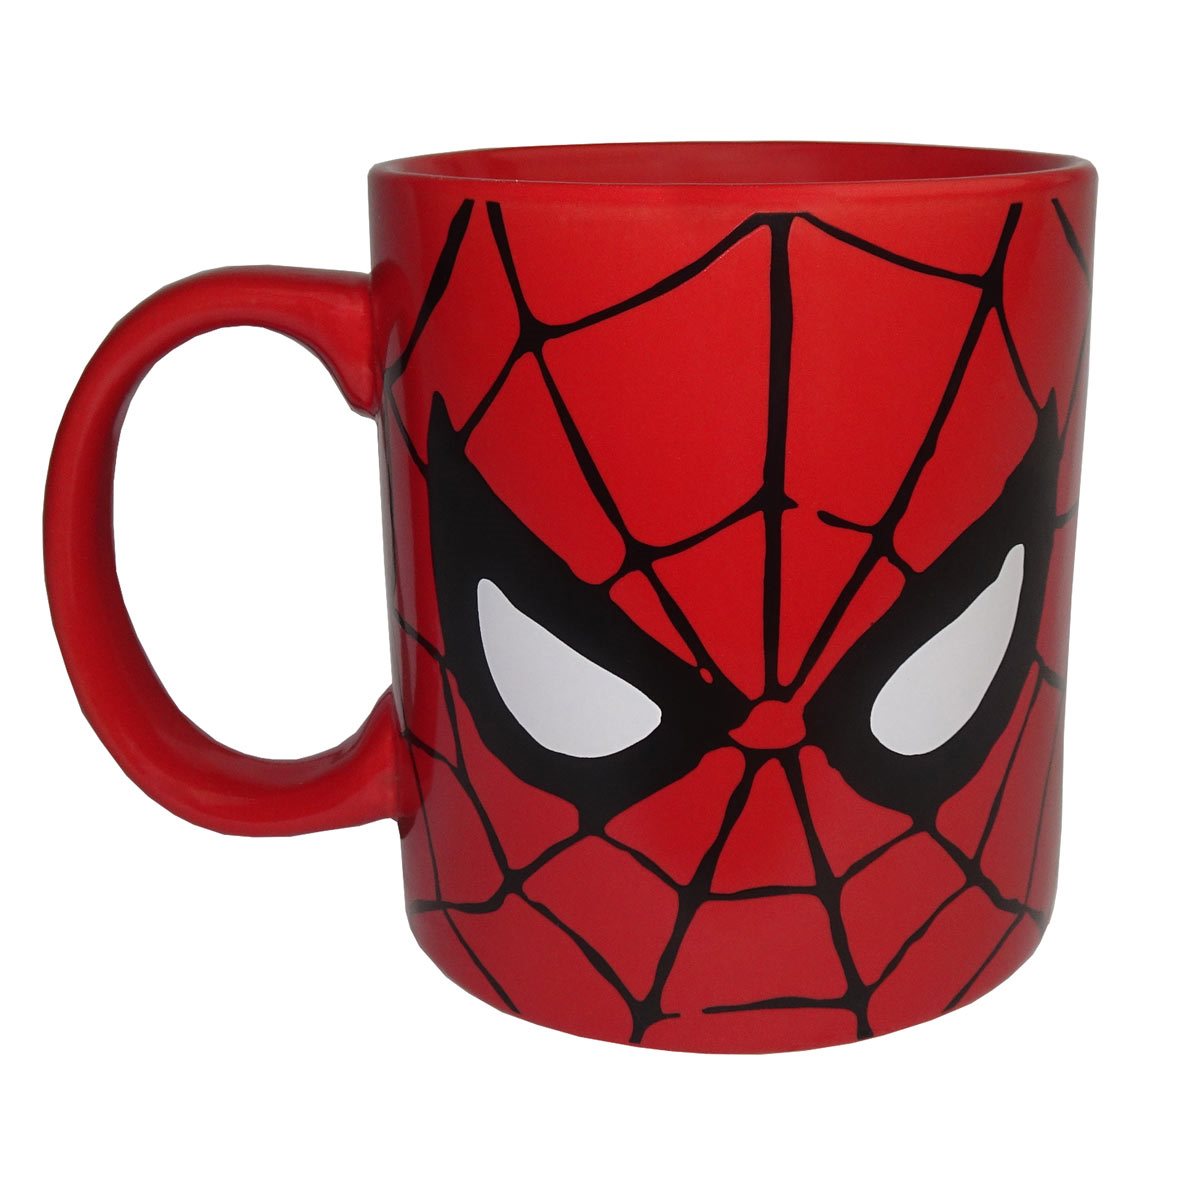 Spider-Man Holiday Mug